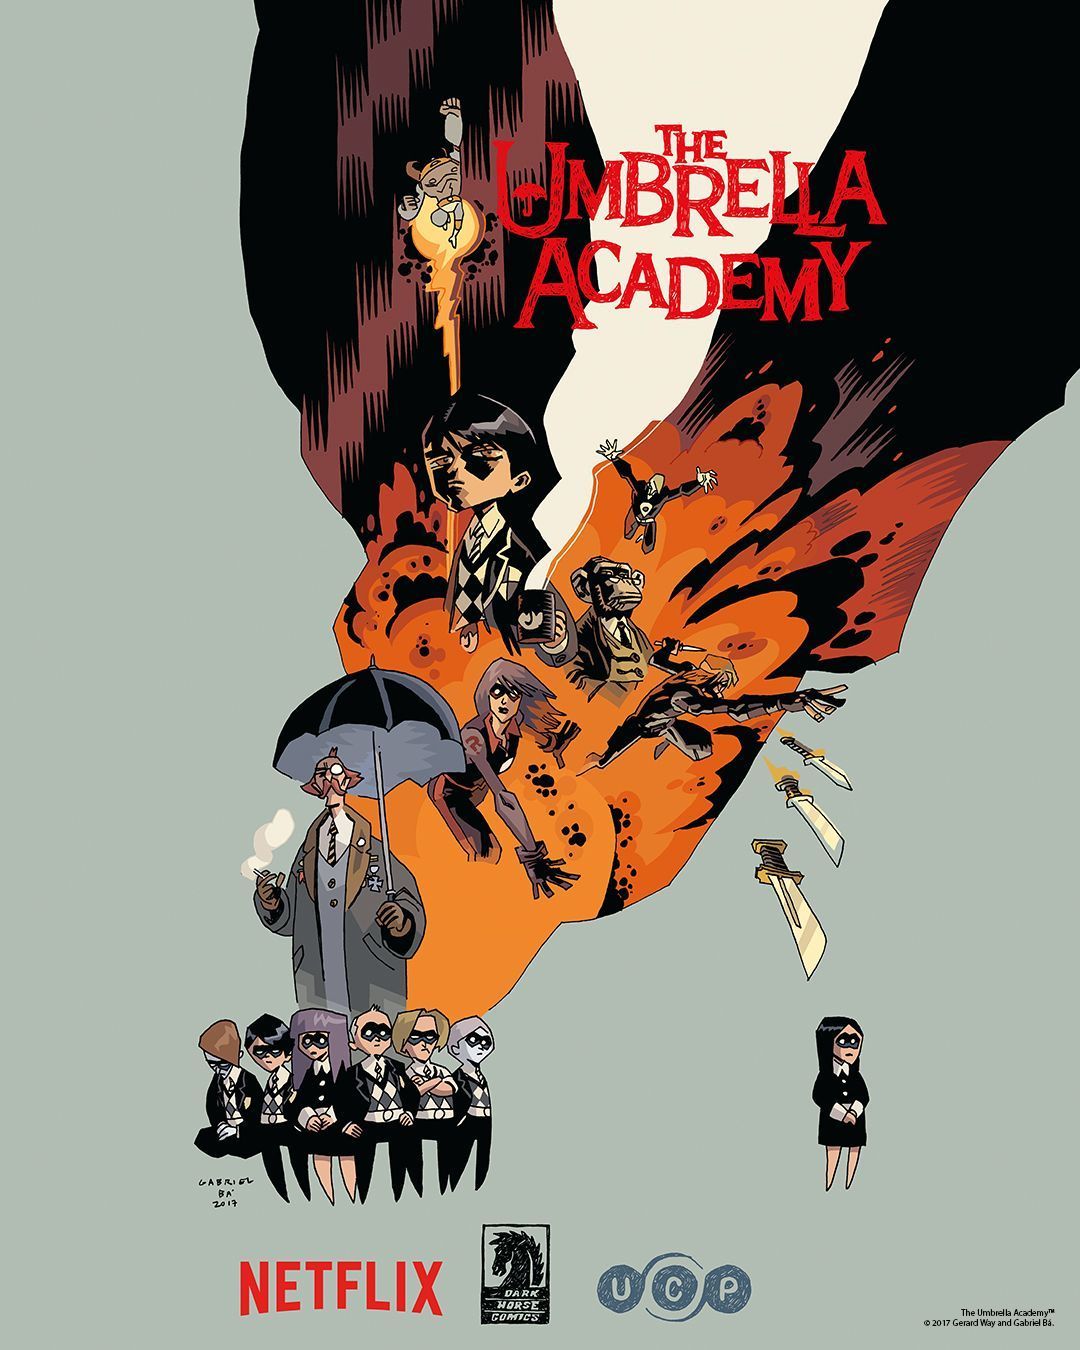 The Umbrella Academy Wallpaper Free The Umbrella Academy